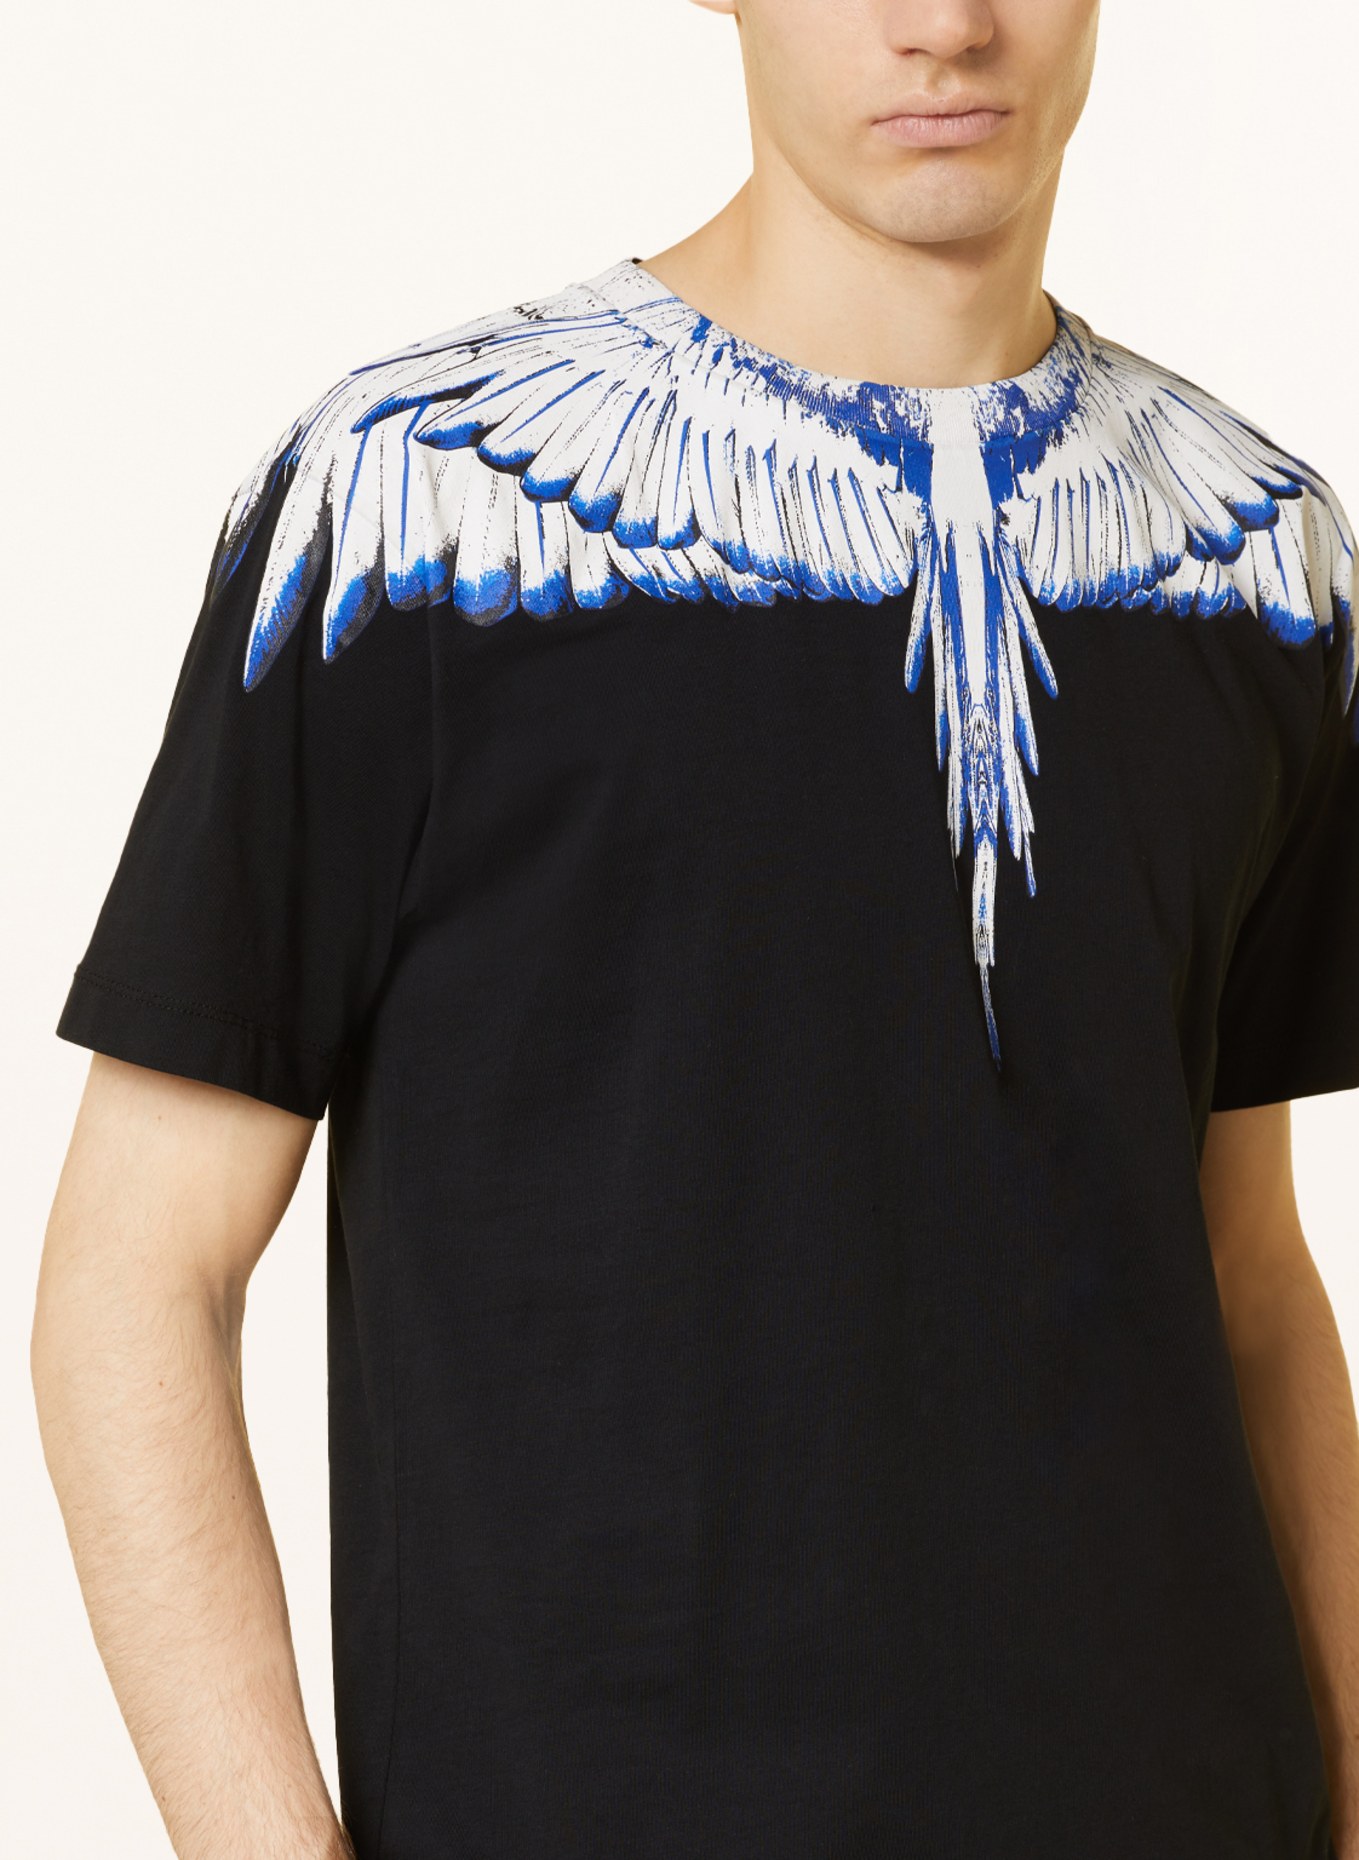 MARCELO BURLON T-shirt ICON WINGS in black/ white/ blue